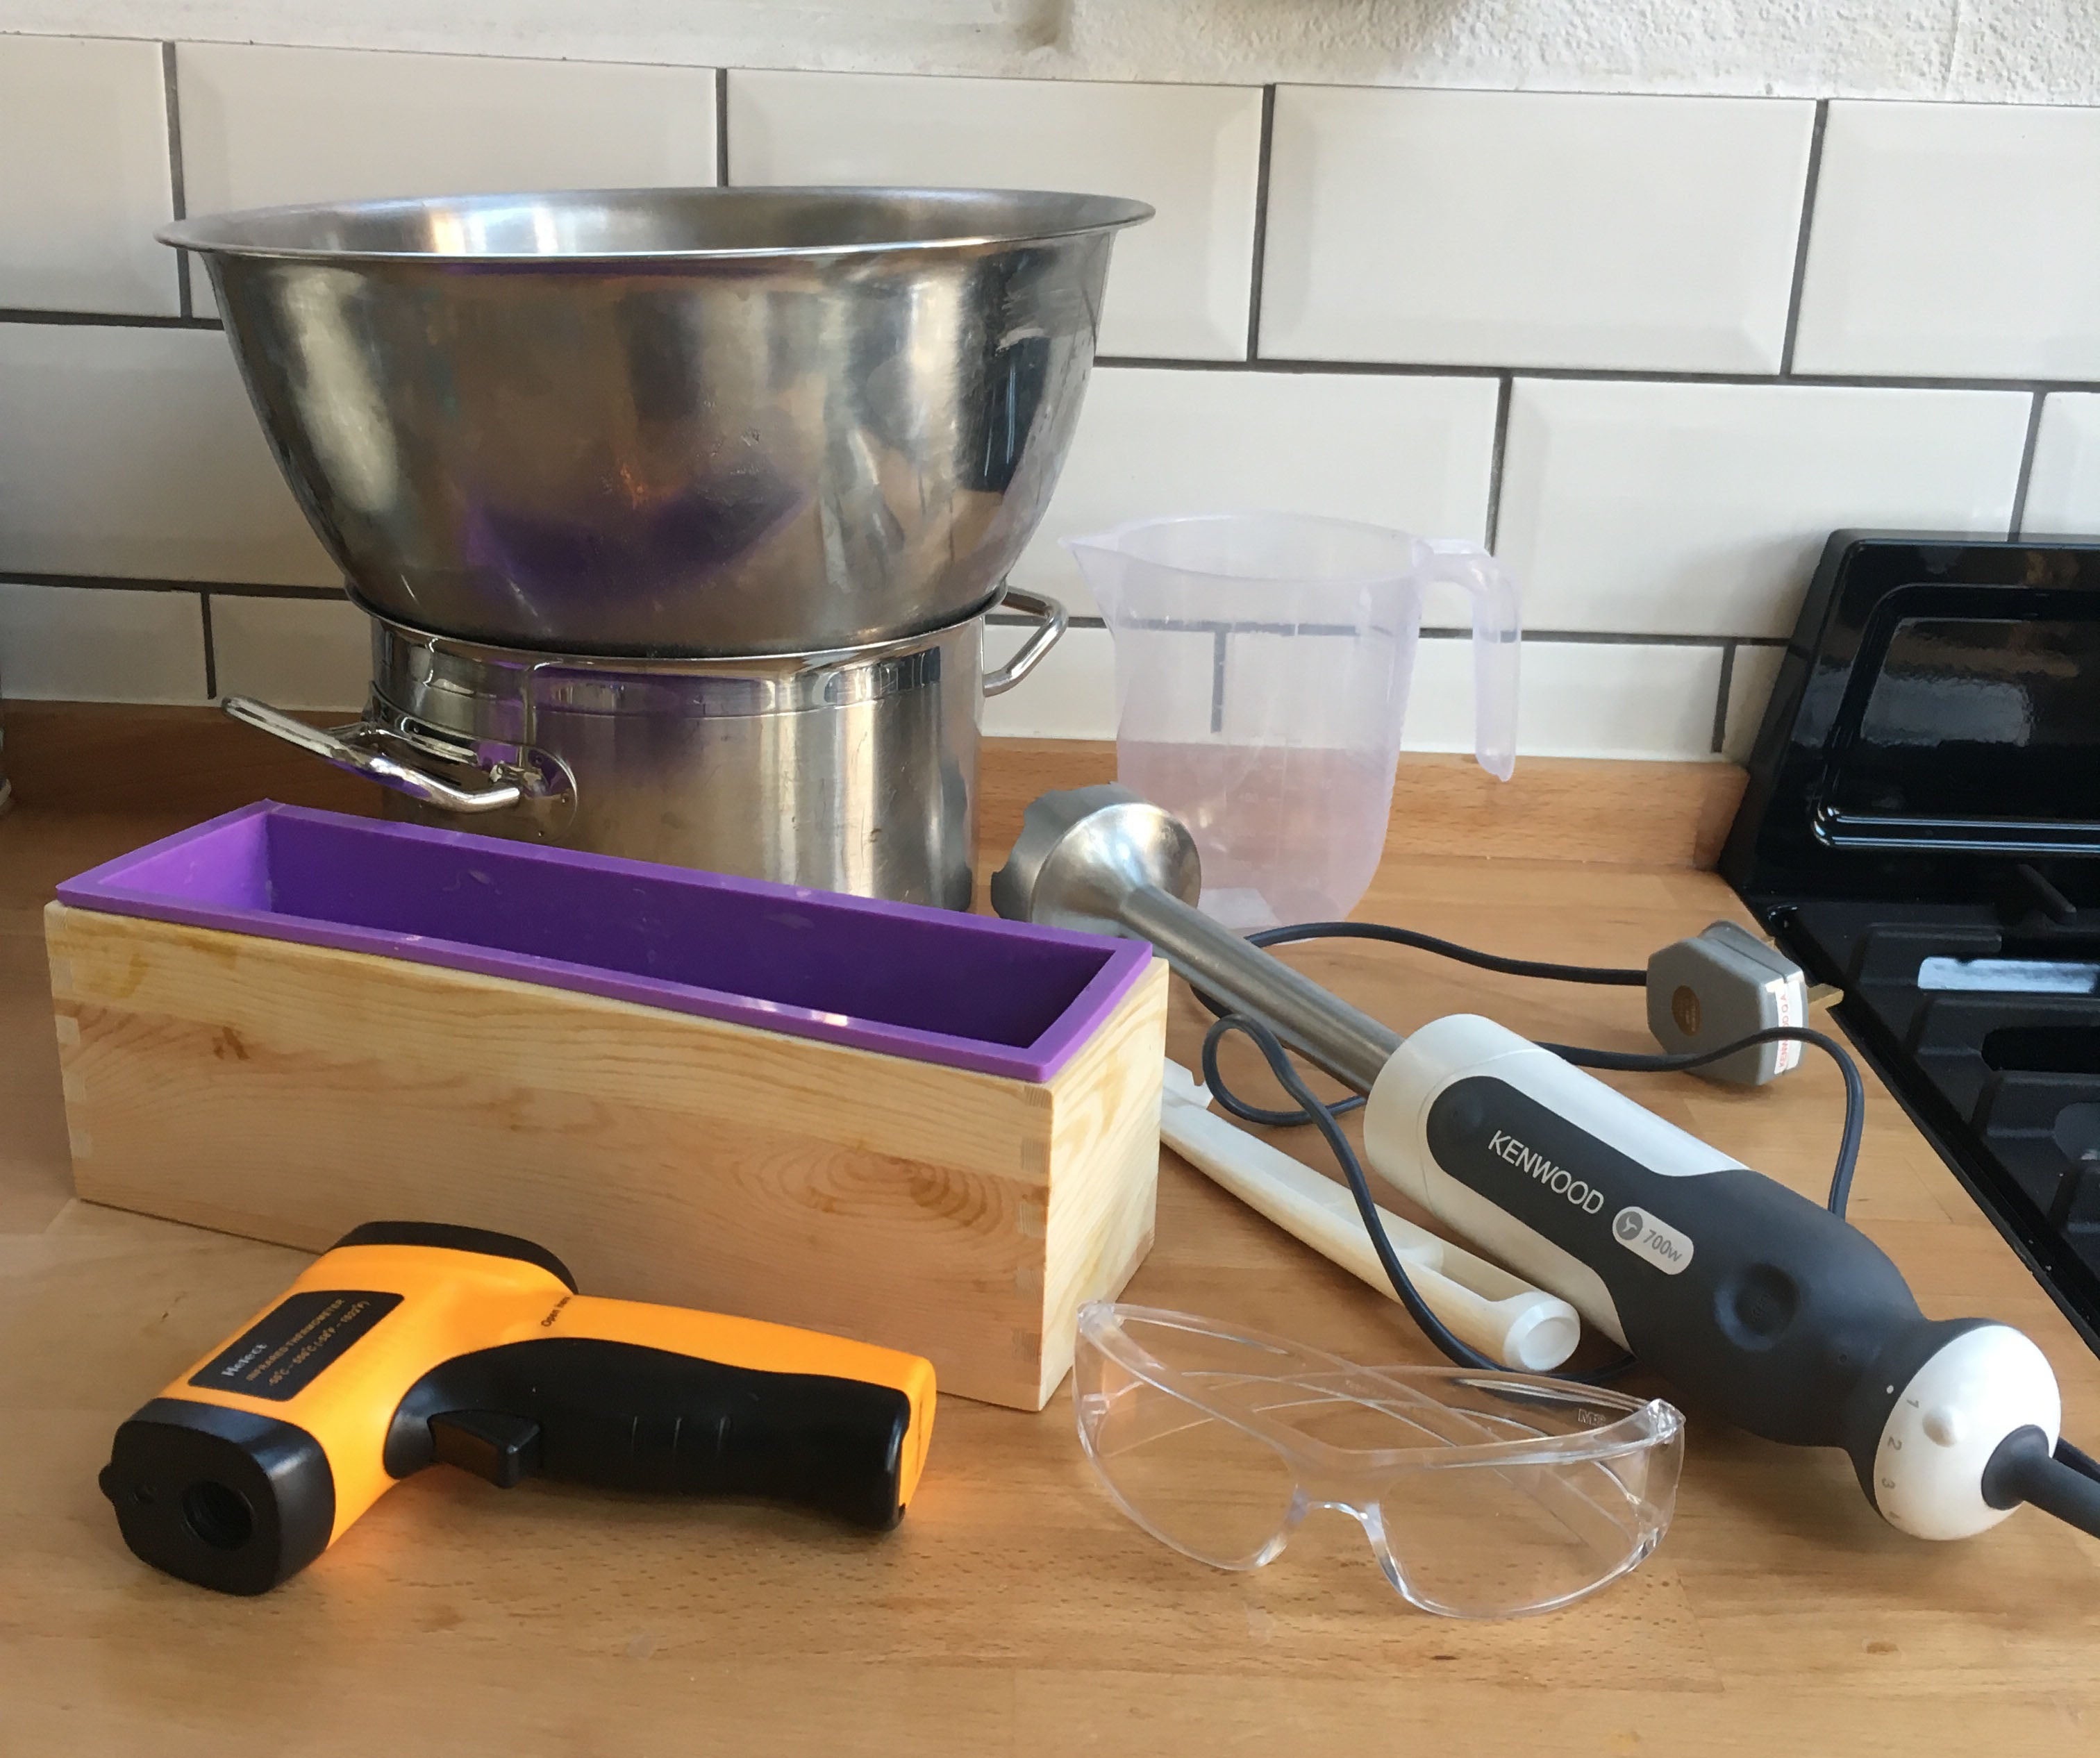 Basic soap making equipment